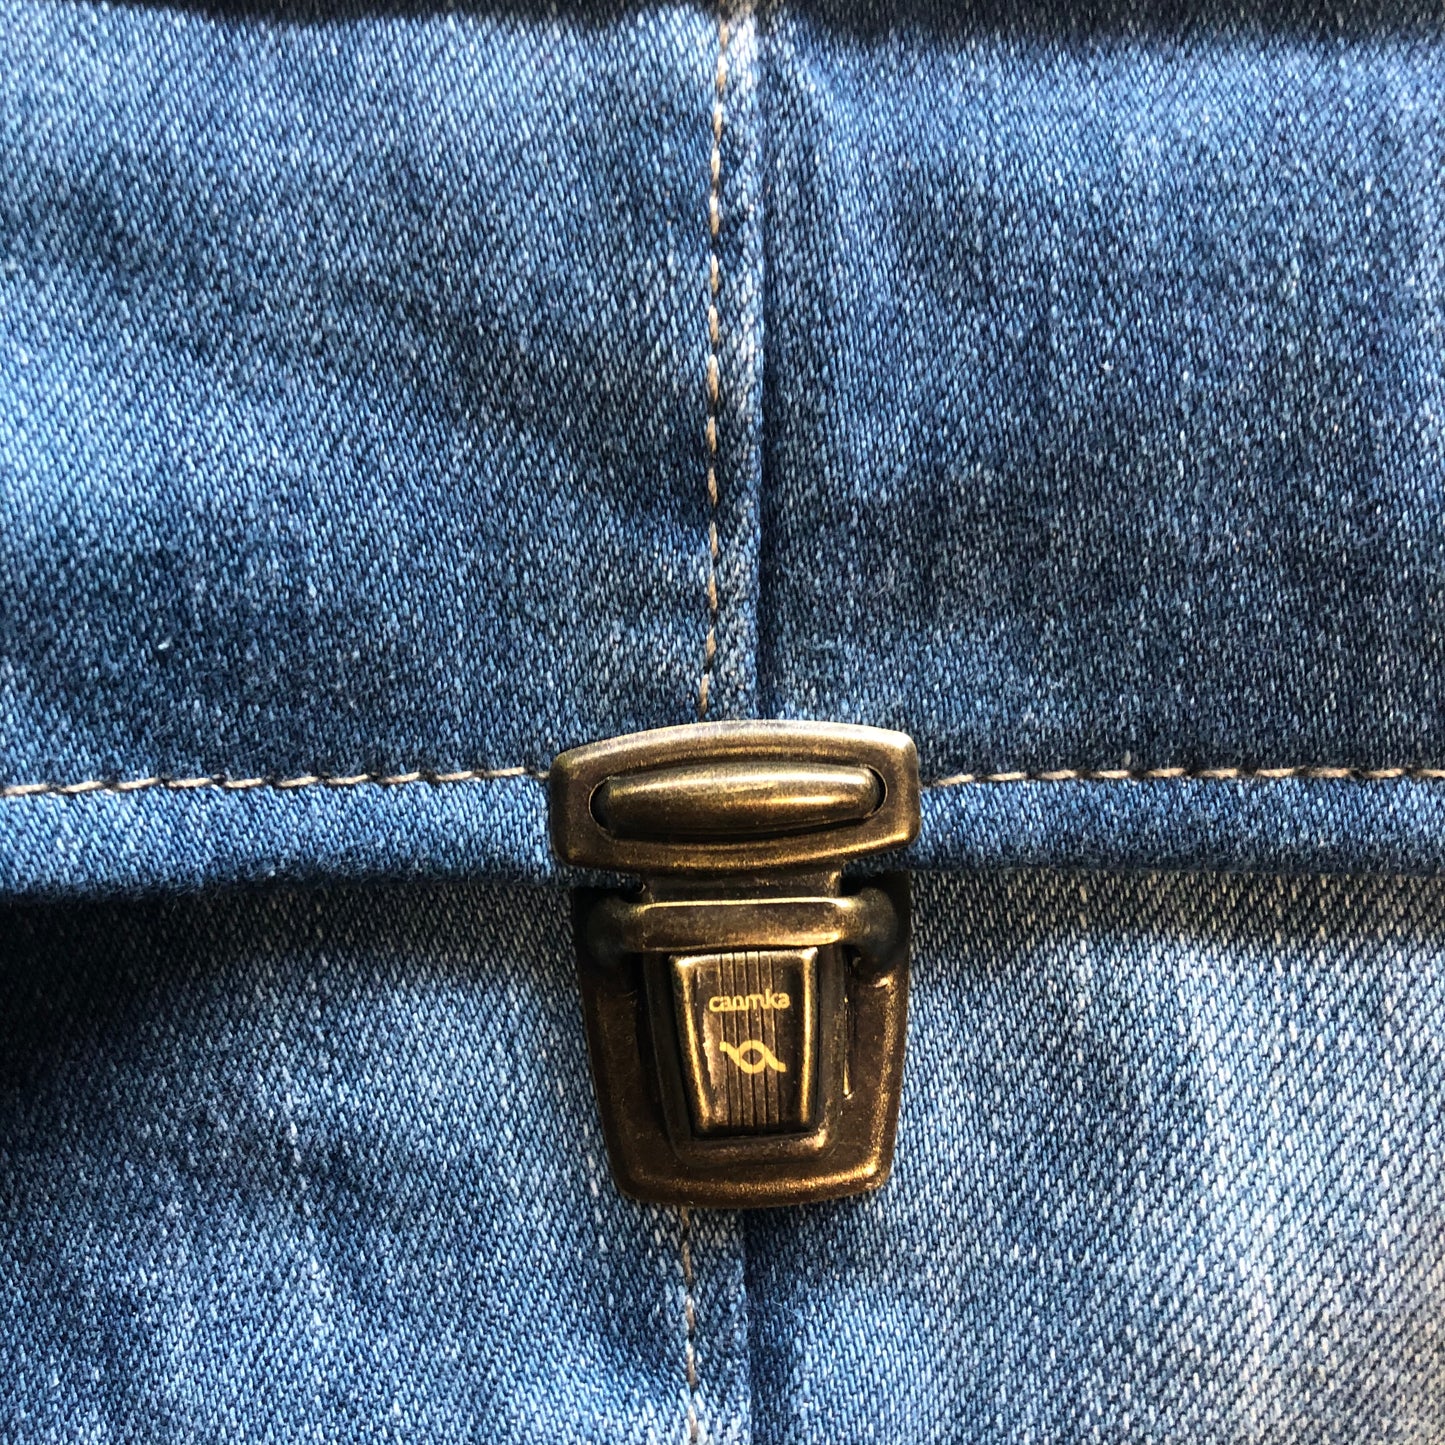 PACK "Marta" Jeans Recycled Original + Mini-Unikate Nr. 7416 + 7417